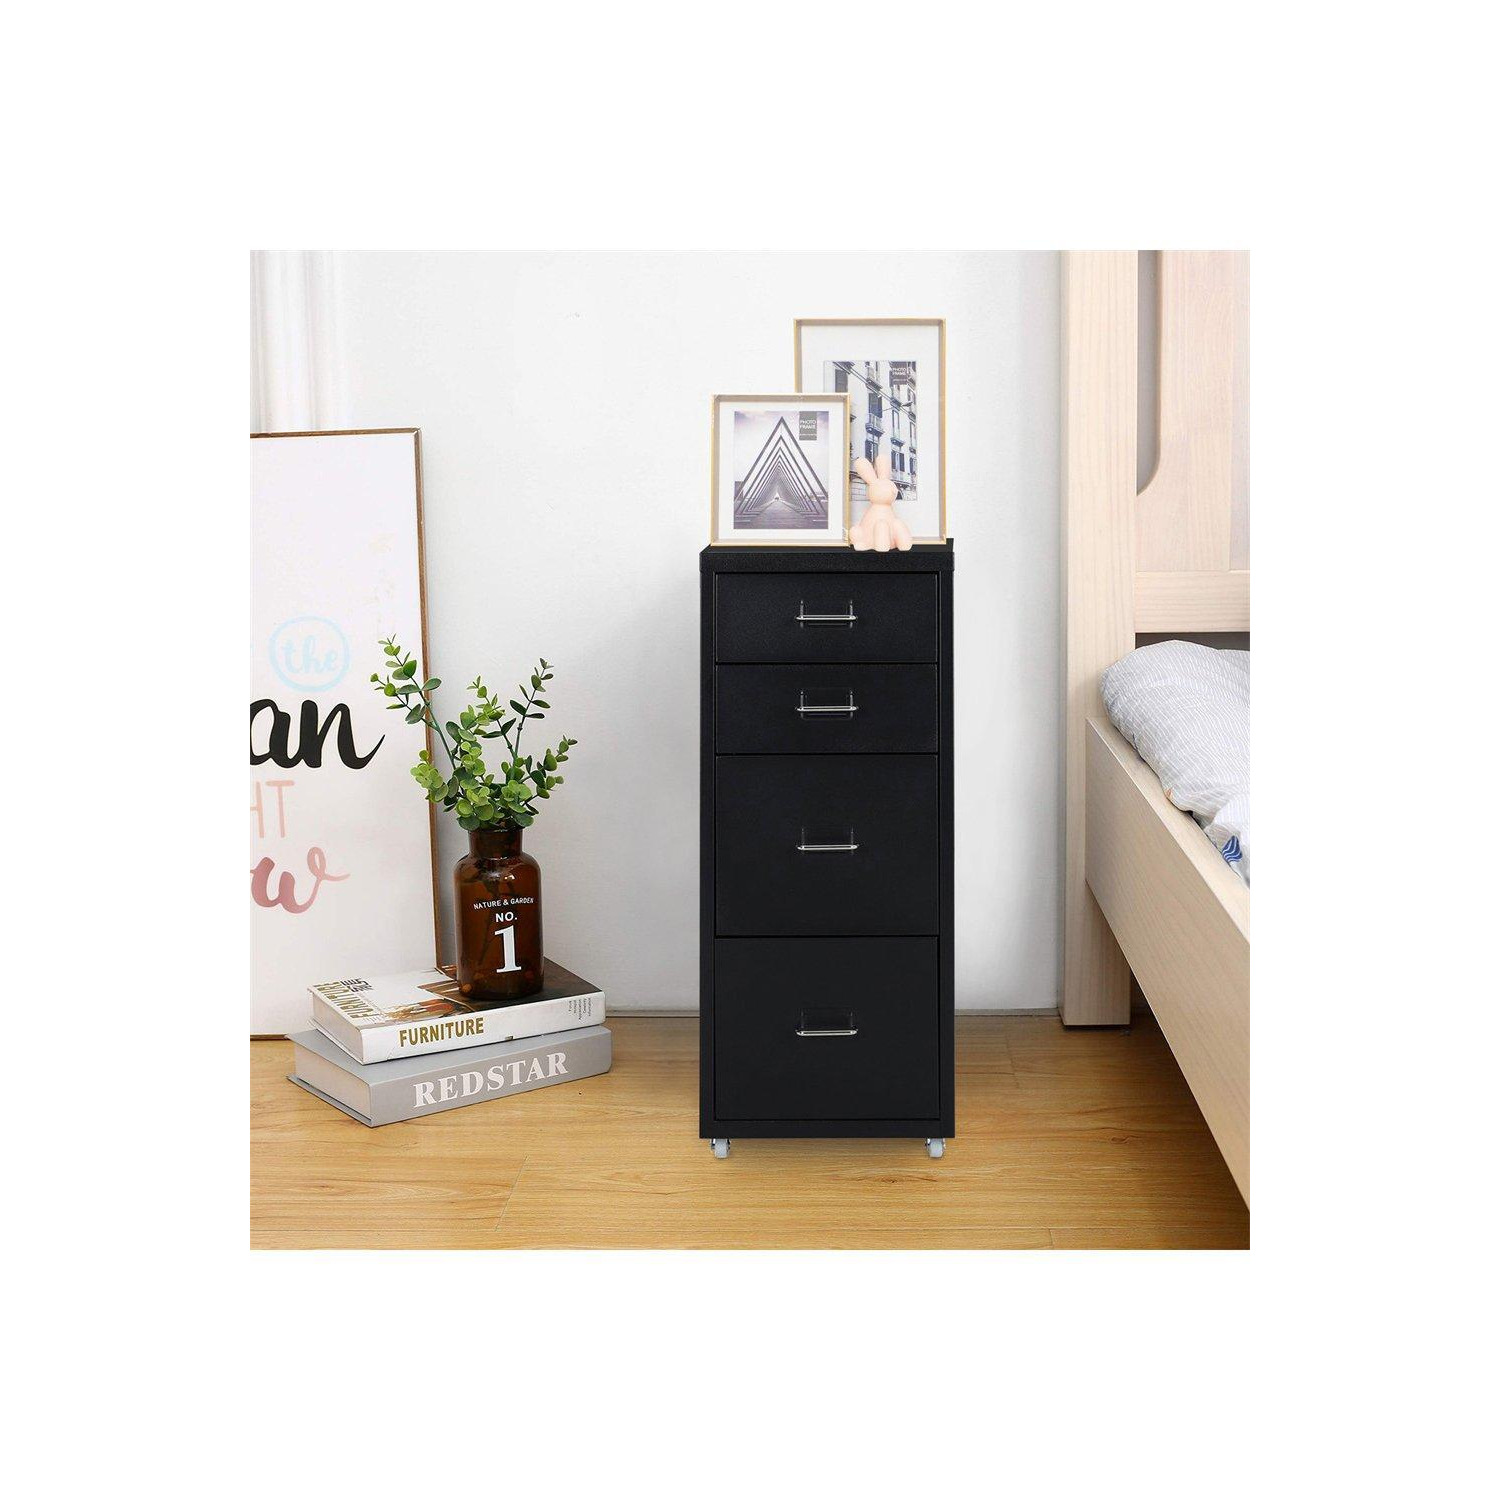 4 Drawers Vertical File Cabinet with Wheels Living Room Storage Cabinet Bedroom Black Bedside Table - image 1